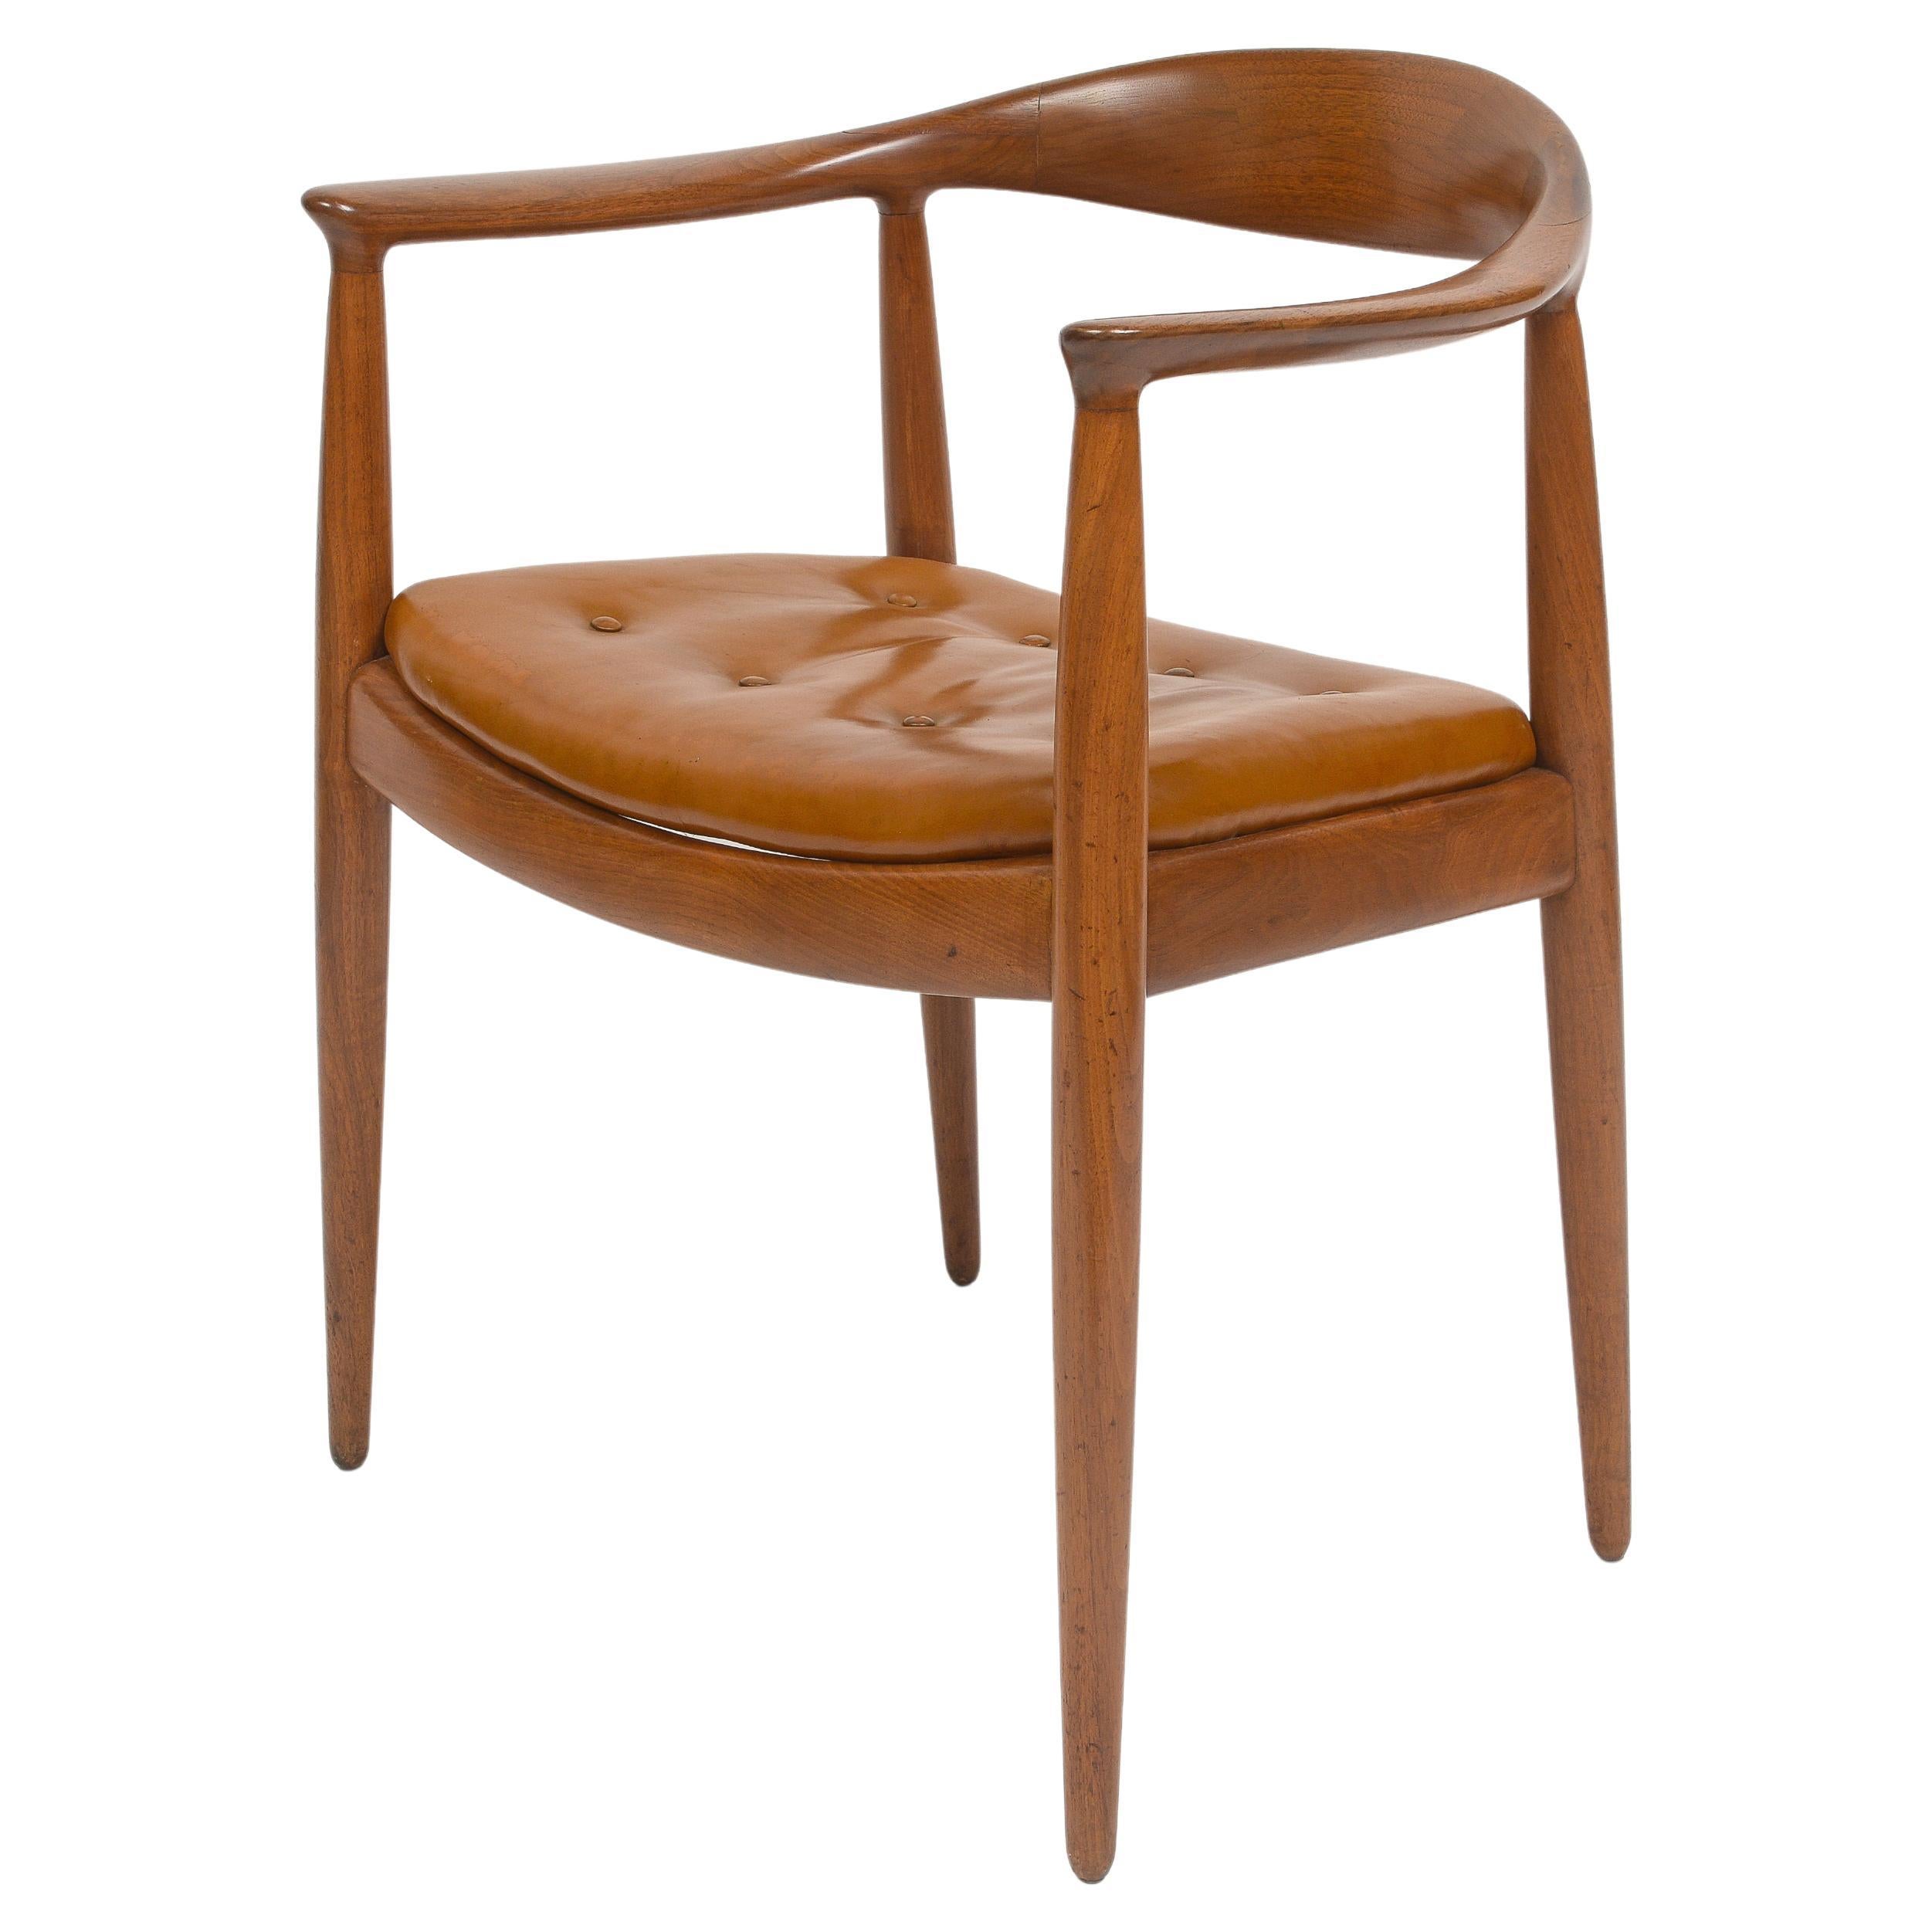 Contemporary 1960s Style Danish Modern Armchair